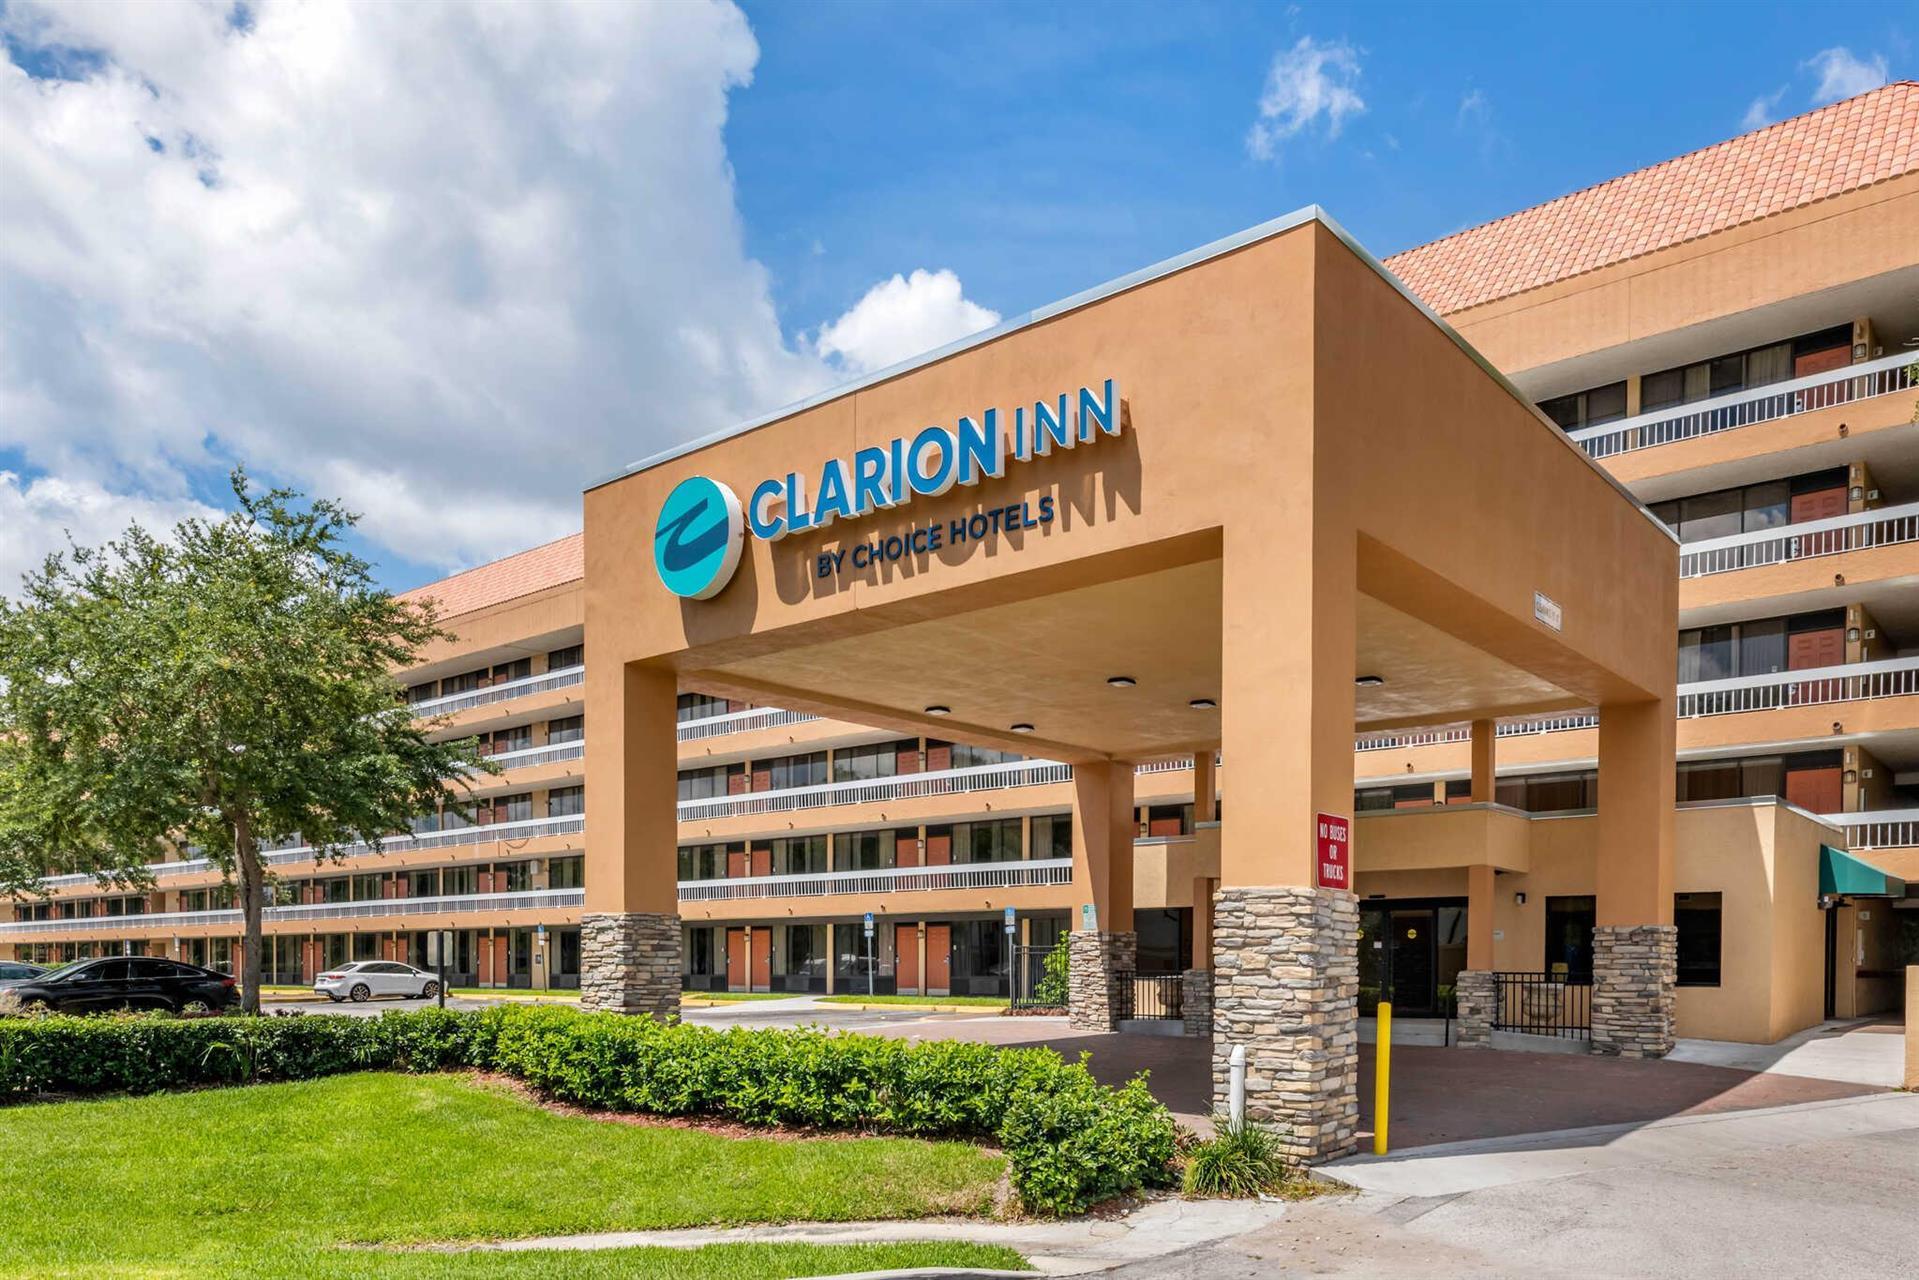 Clarion Inn International Drive in Orlando, FL